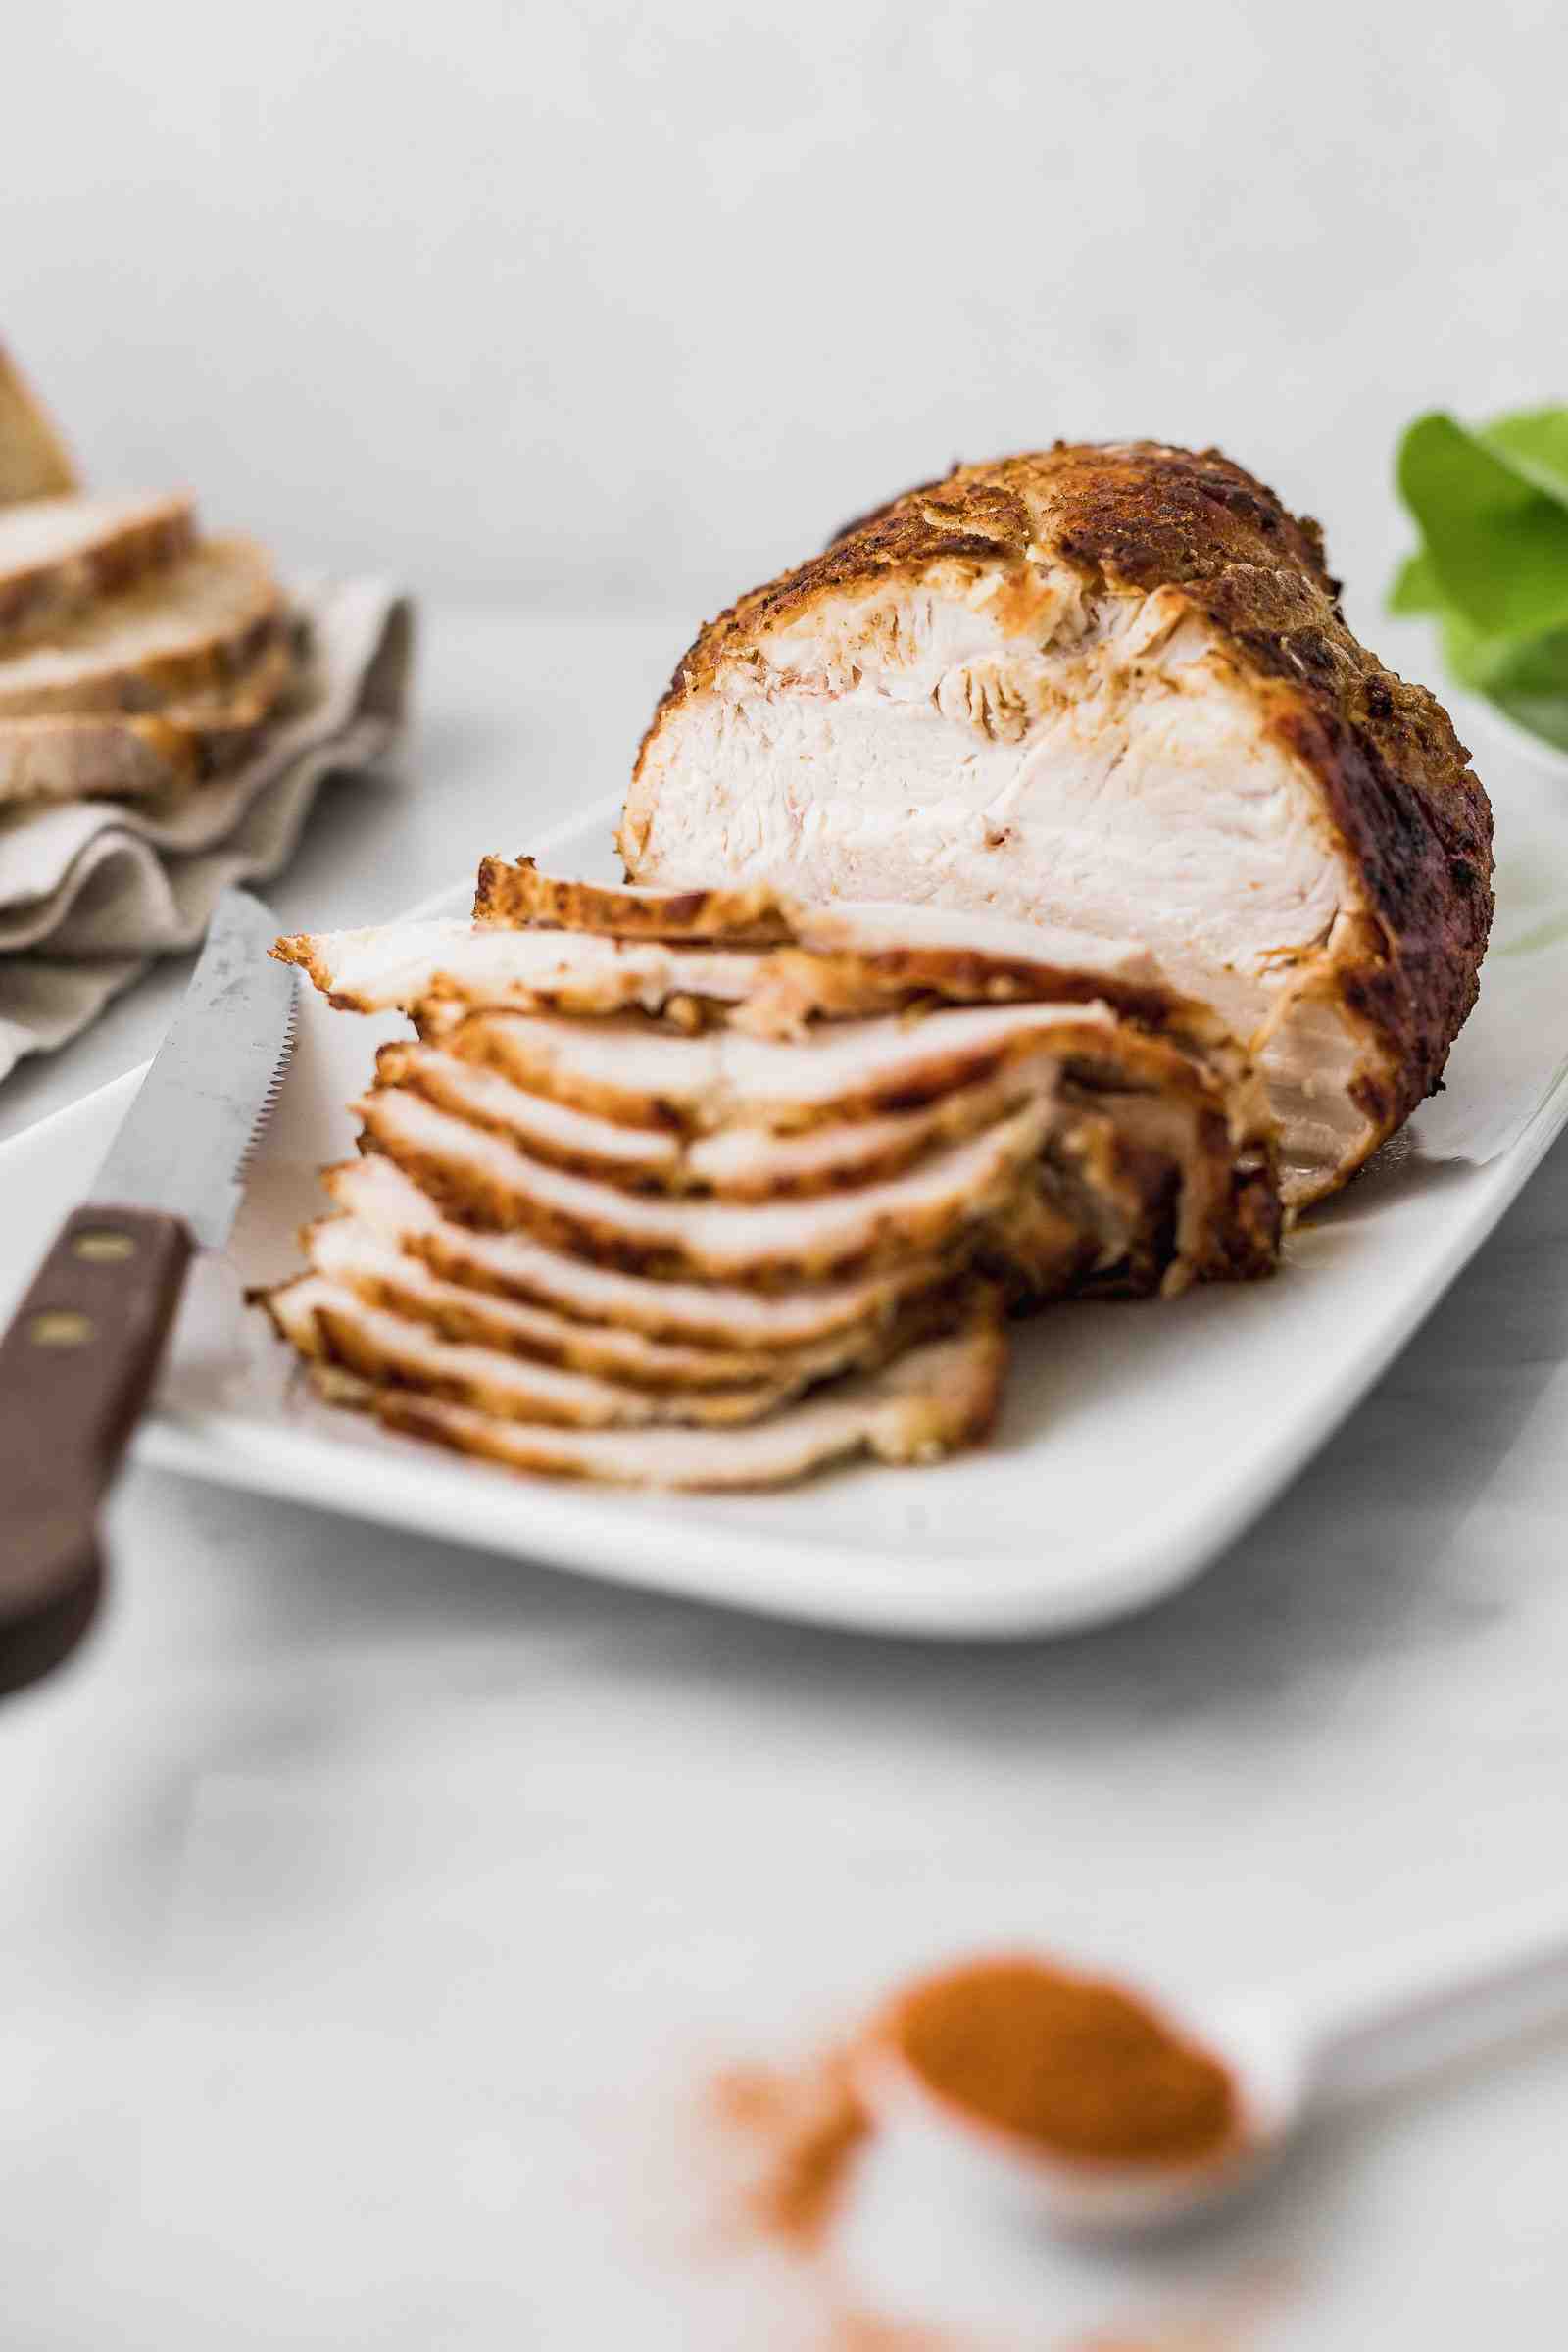 Is smoked turkey ham healthy?